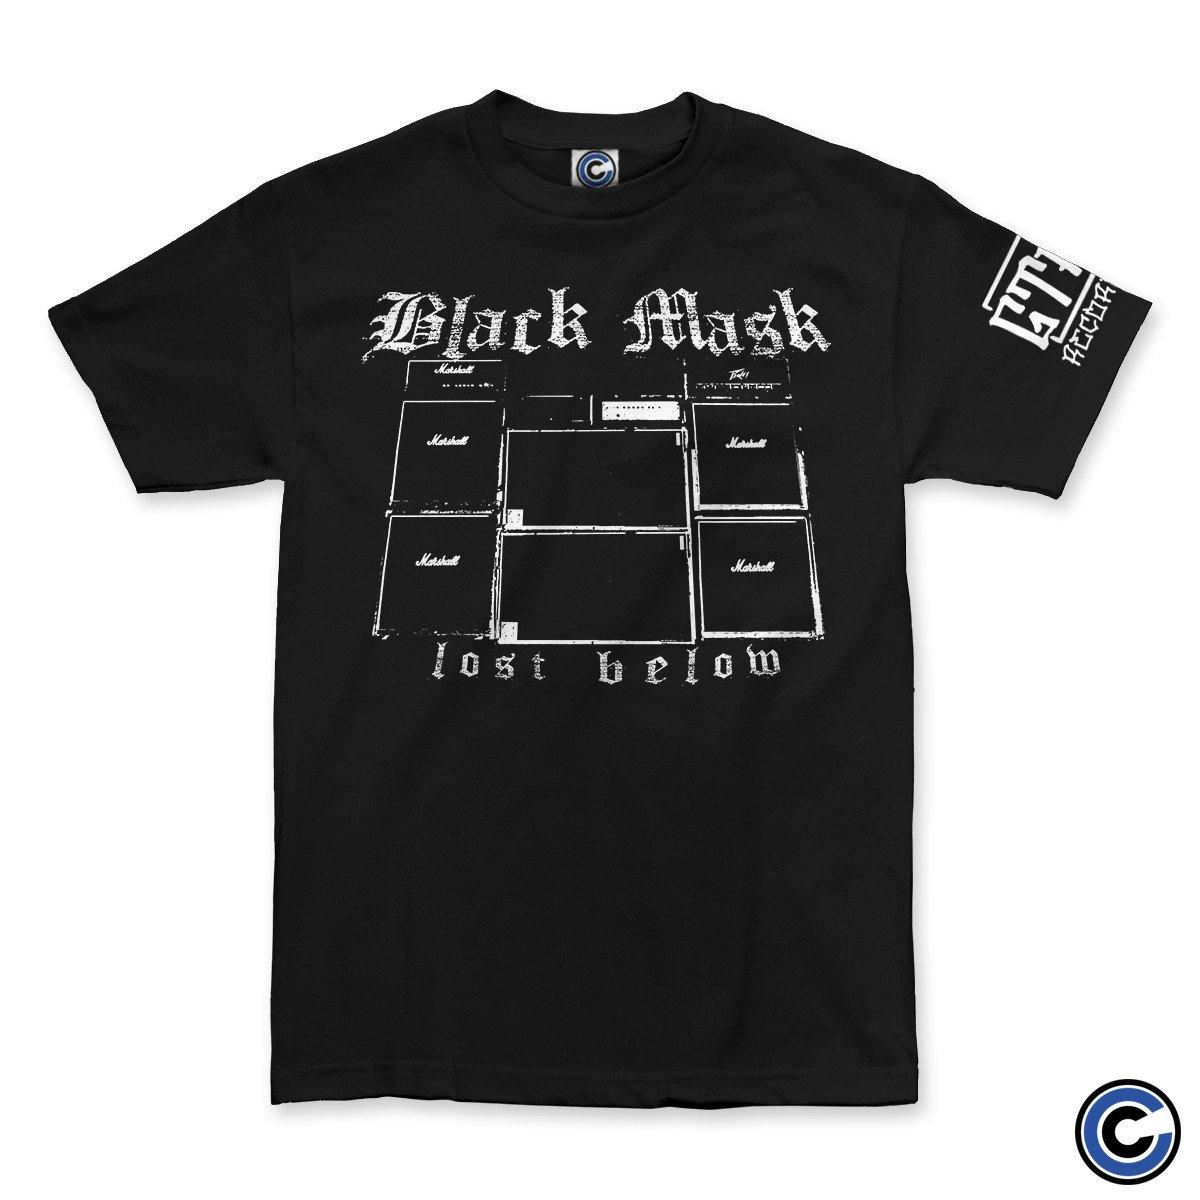 Buy – Black Mask "Lost Below" Shirt – Band & Music Merch – Cold Cuts Merch